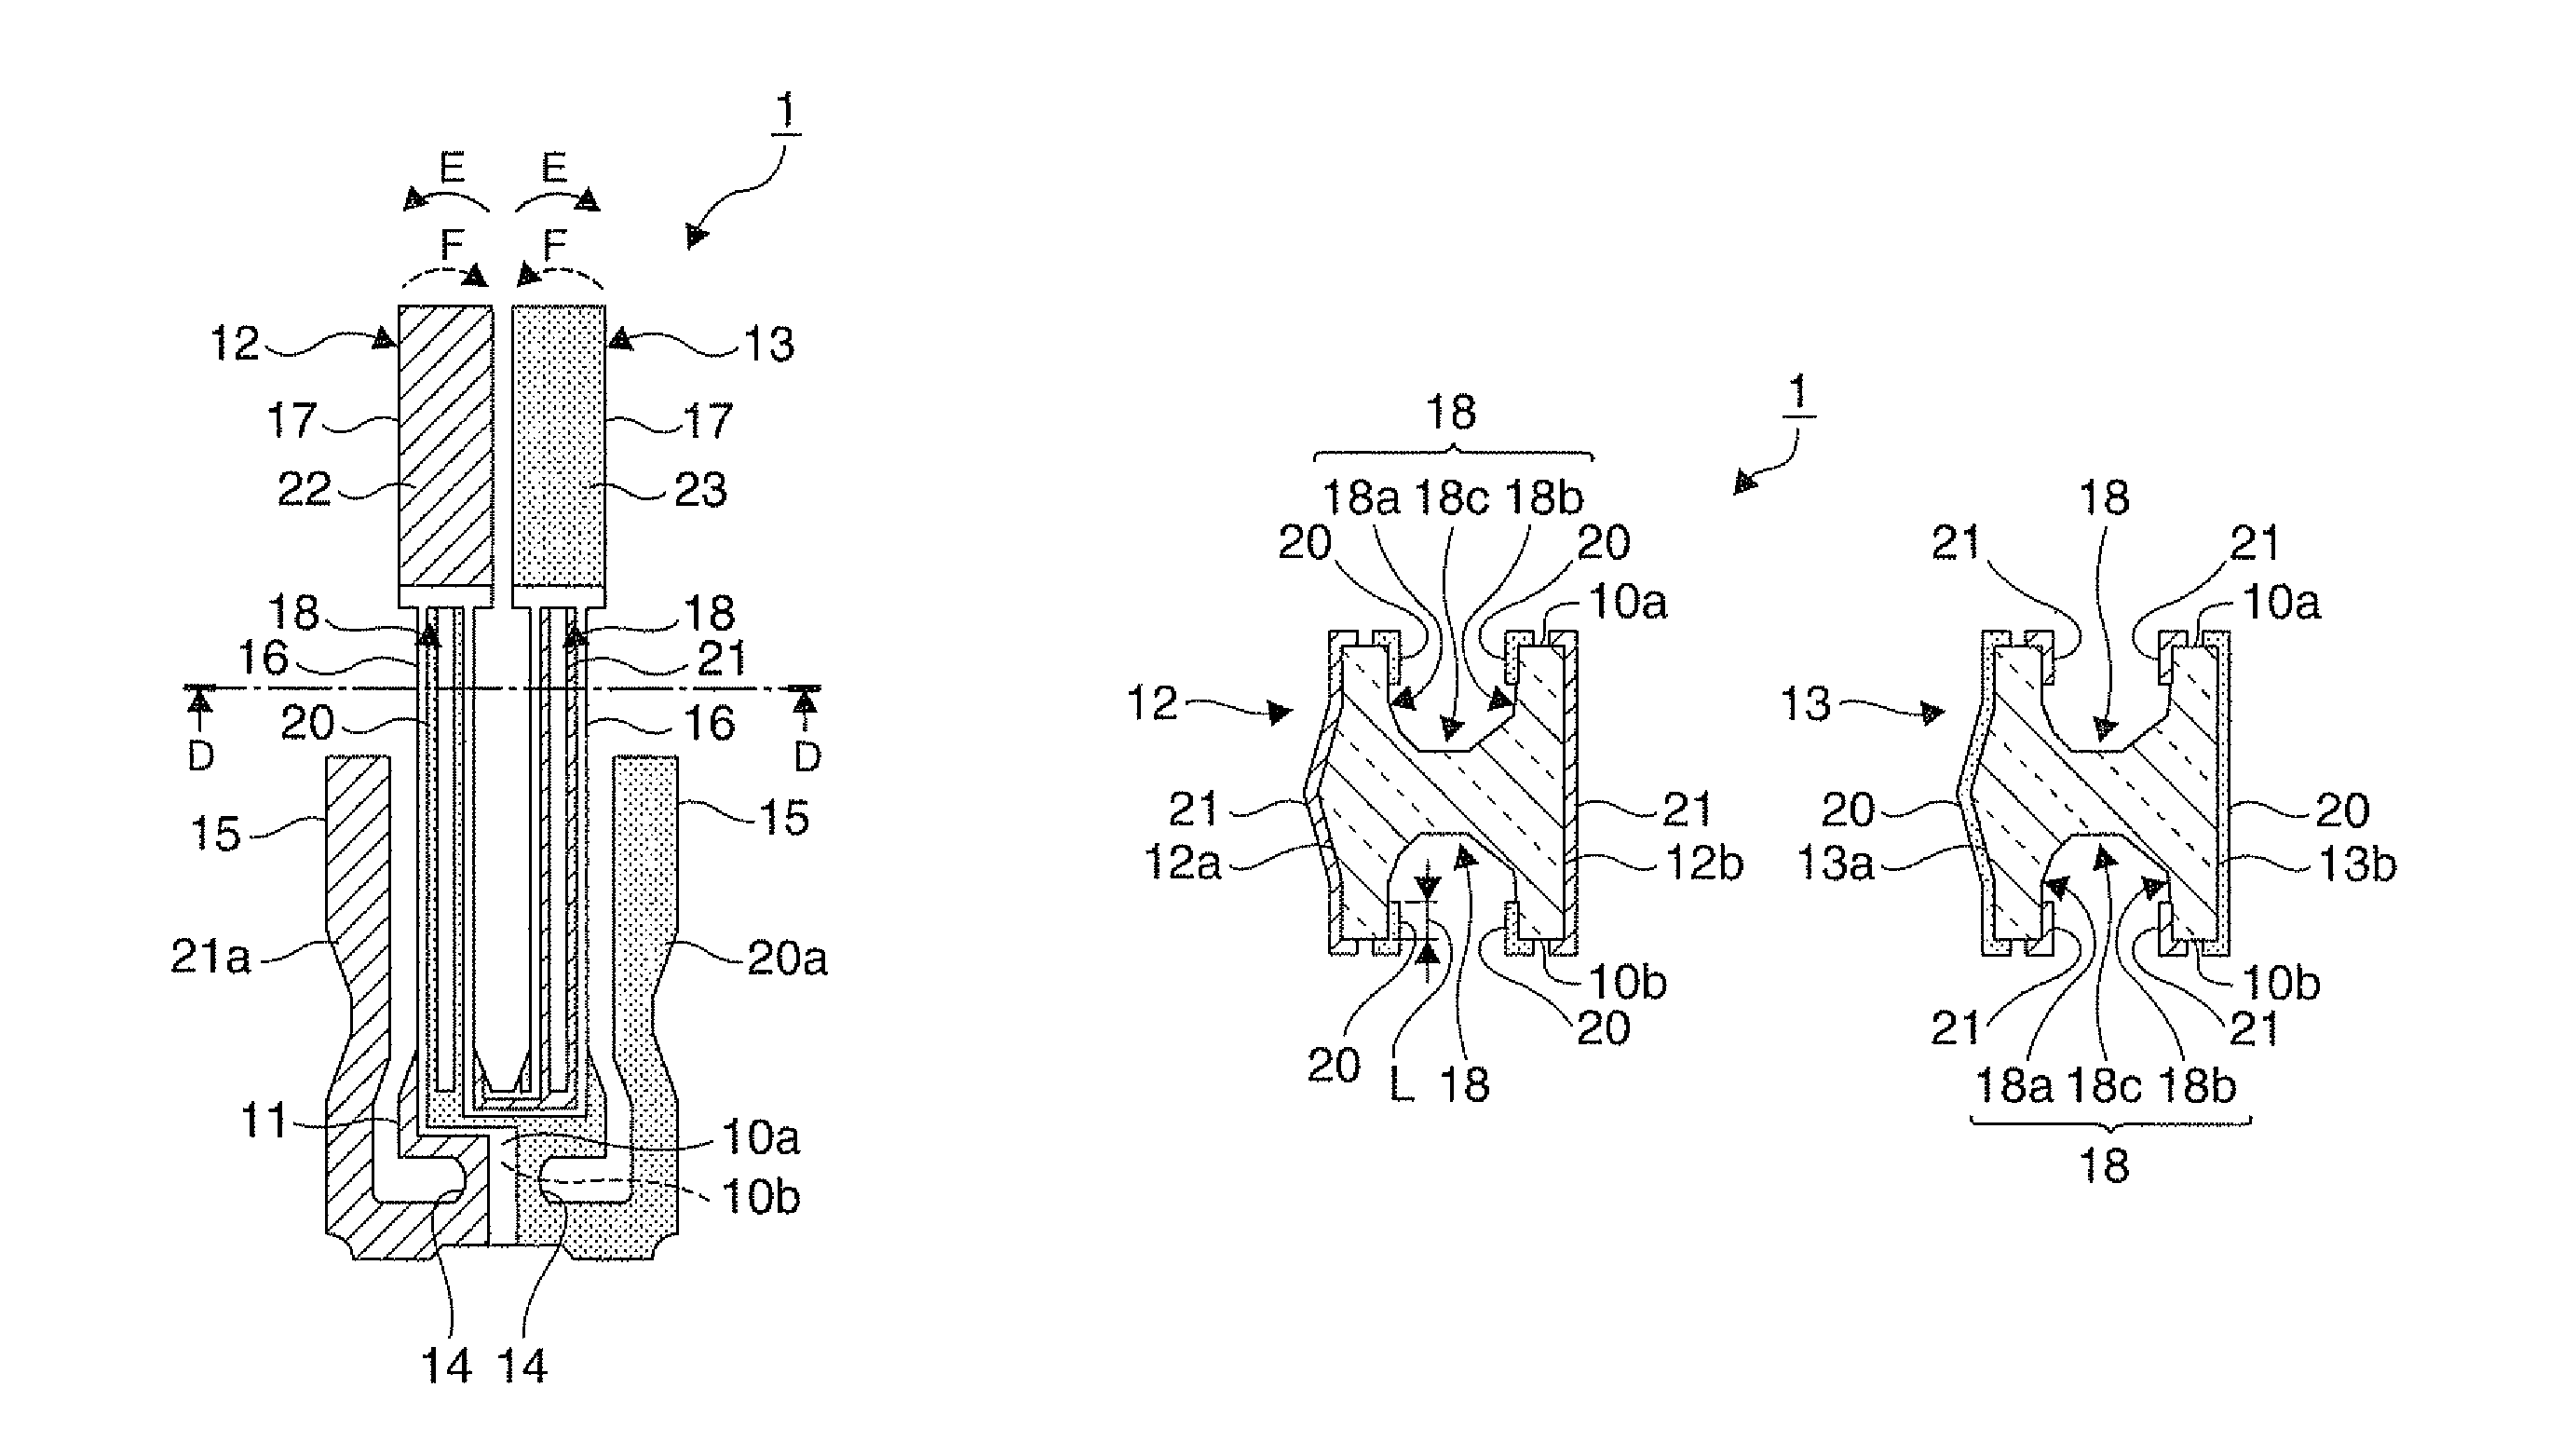 Resonator element, resonator, and oscillator